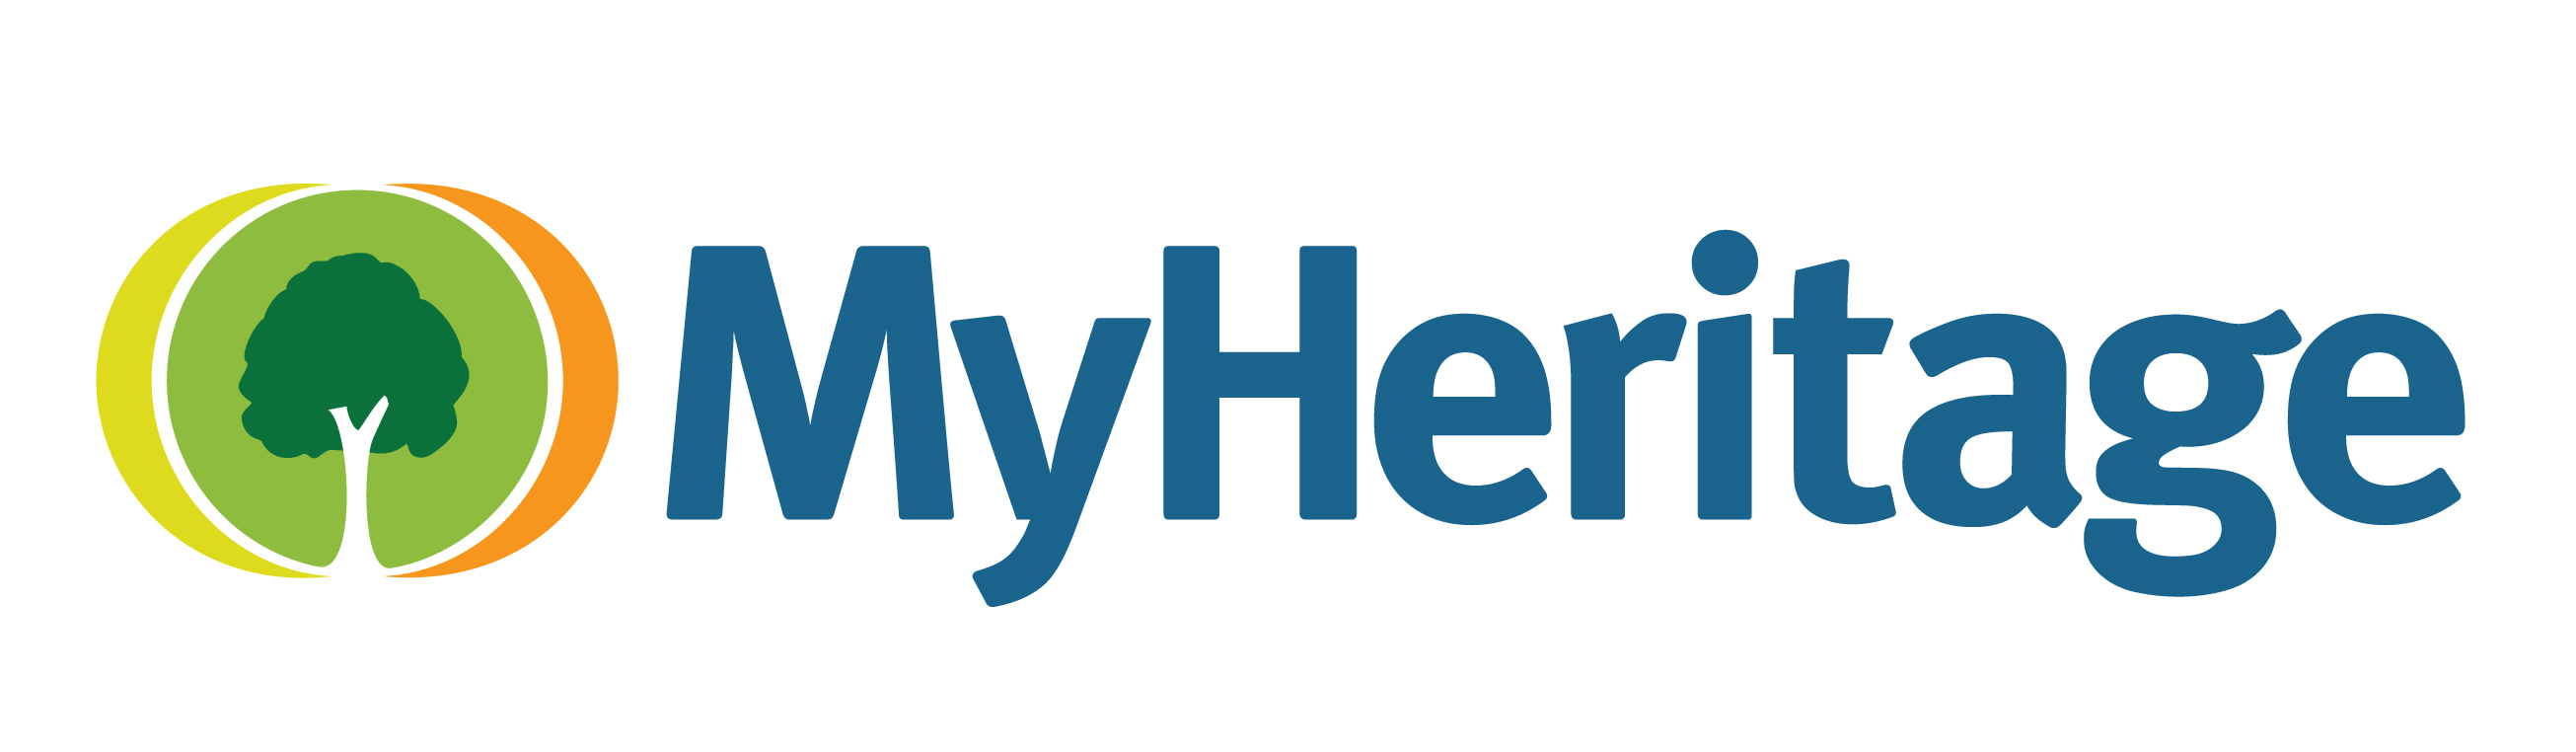 MyHeritage.com logo updated Oct 2014